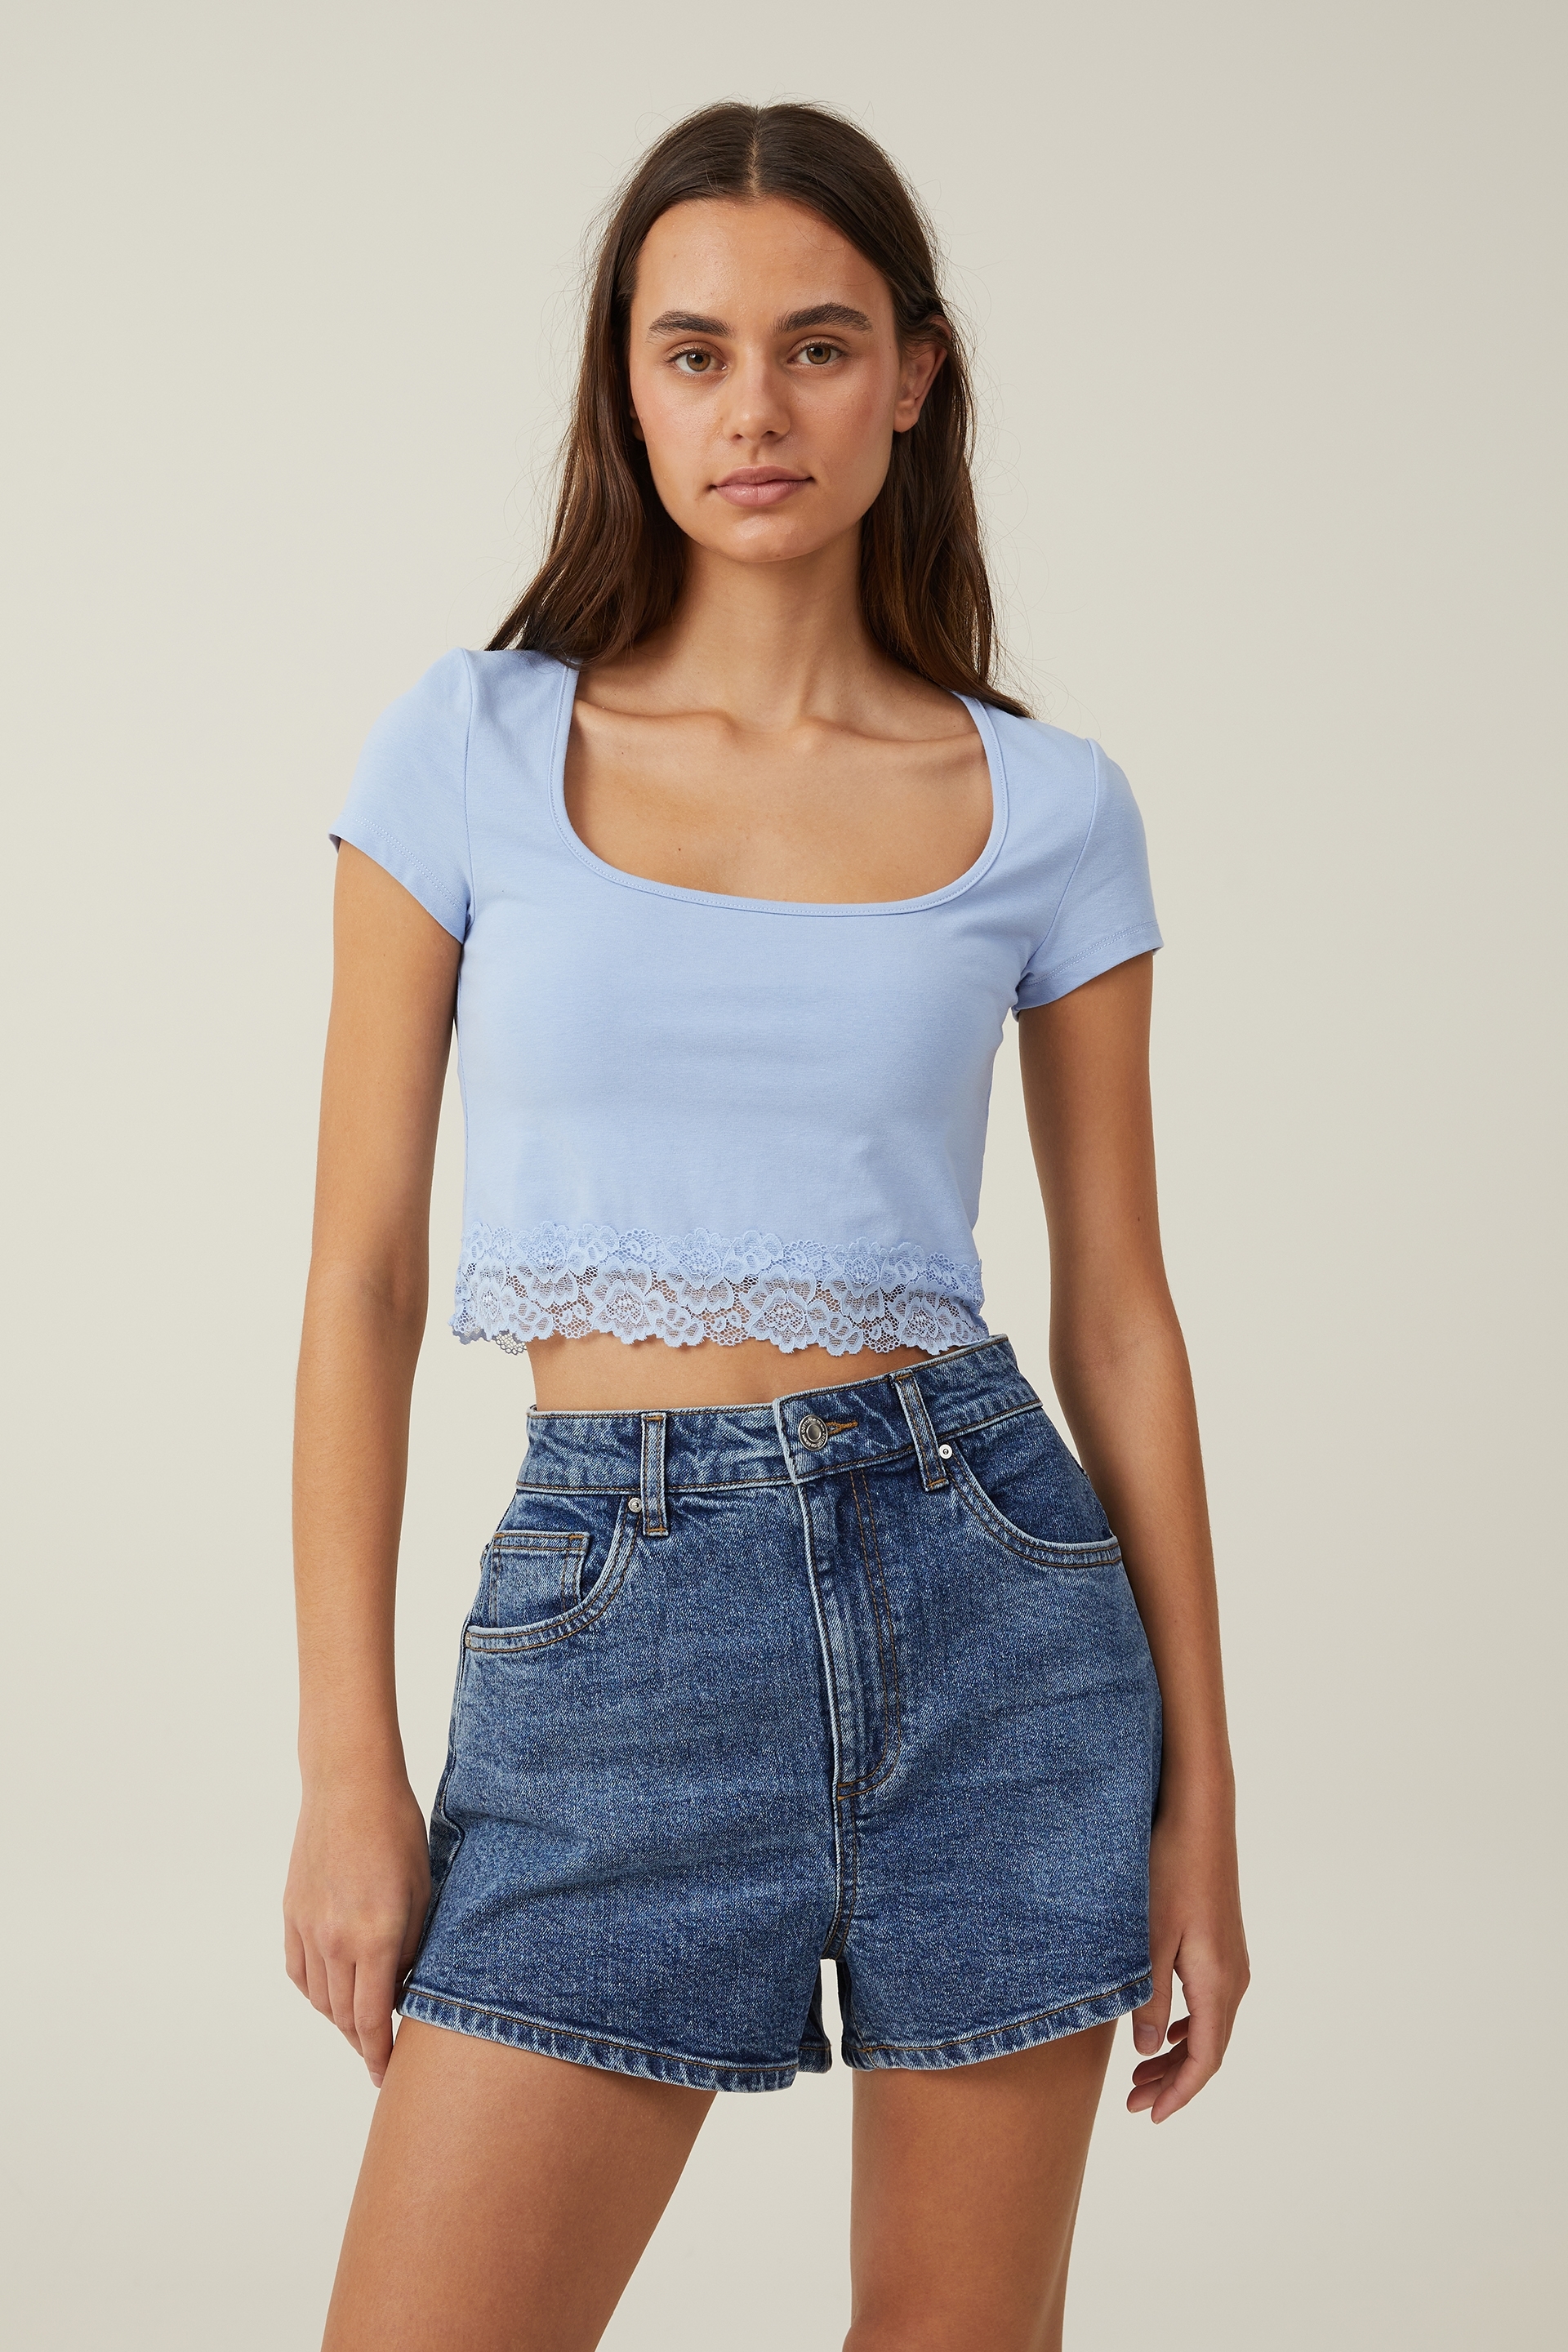 Cotton On Women - Katie Lace Hem Short Sleeve Top - Soft blue